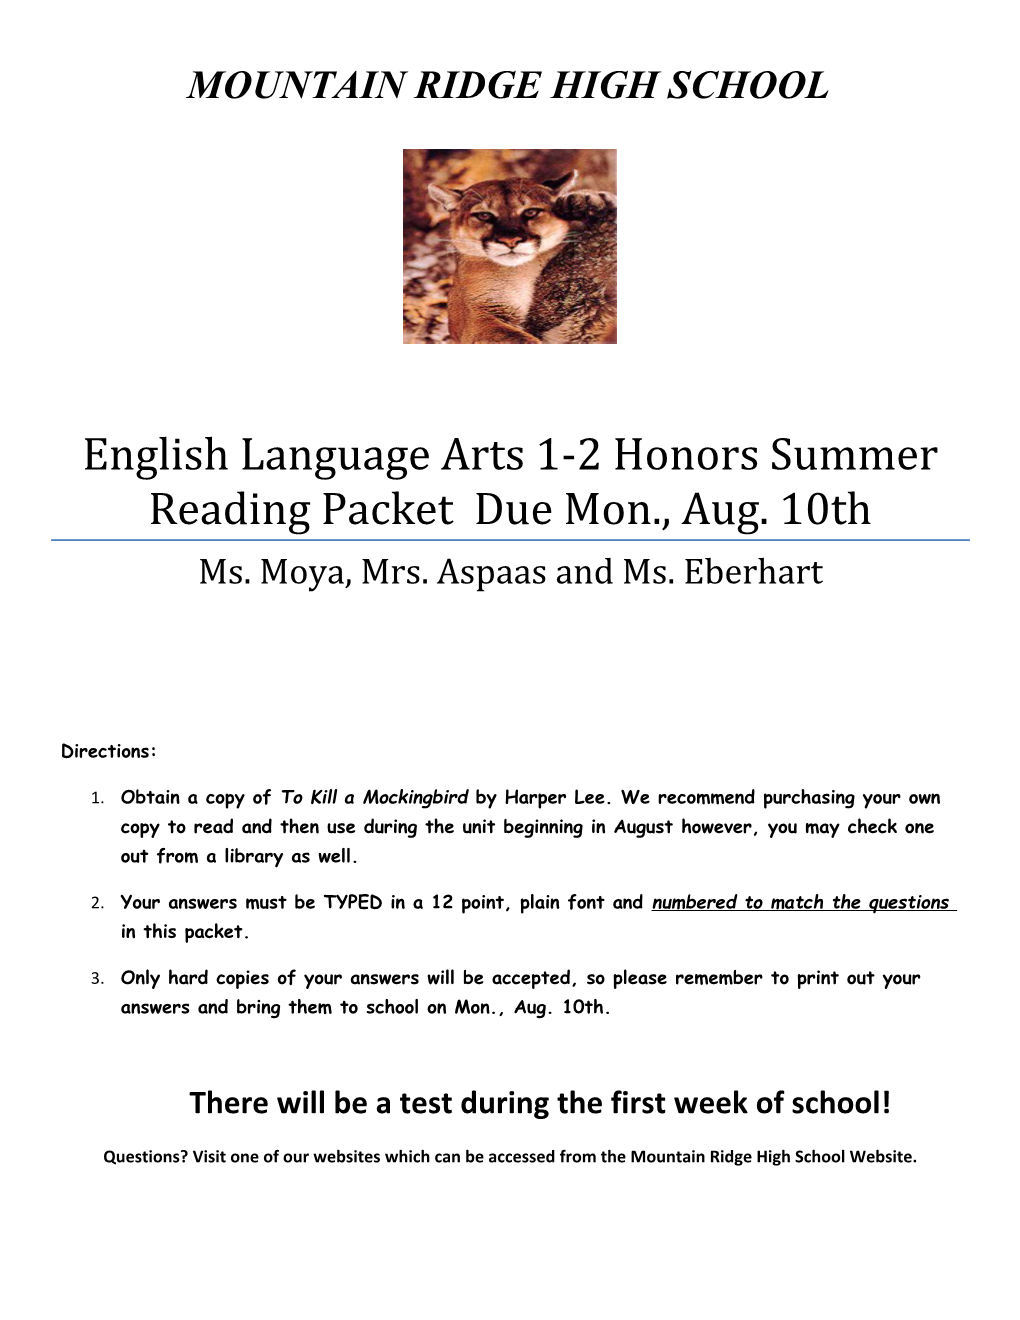 English Language Arts 1-2 Honors Summer Reading Packet Due Mon., Aug. 10Th